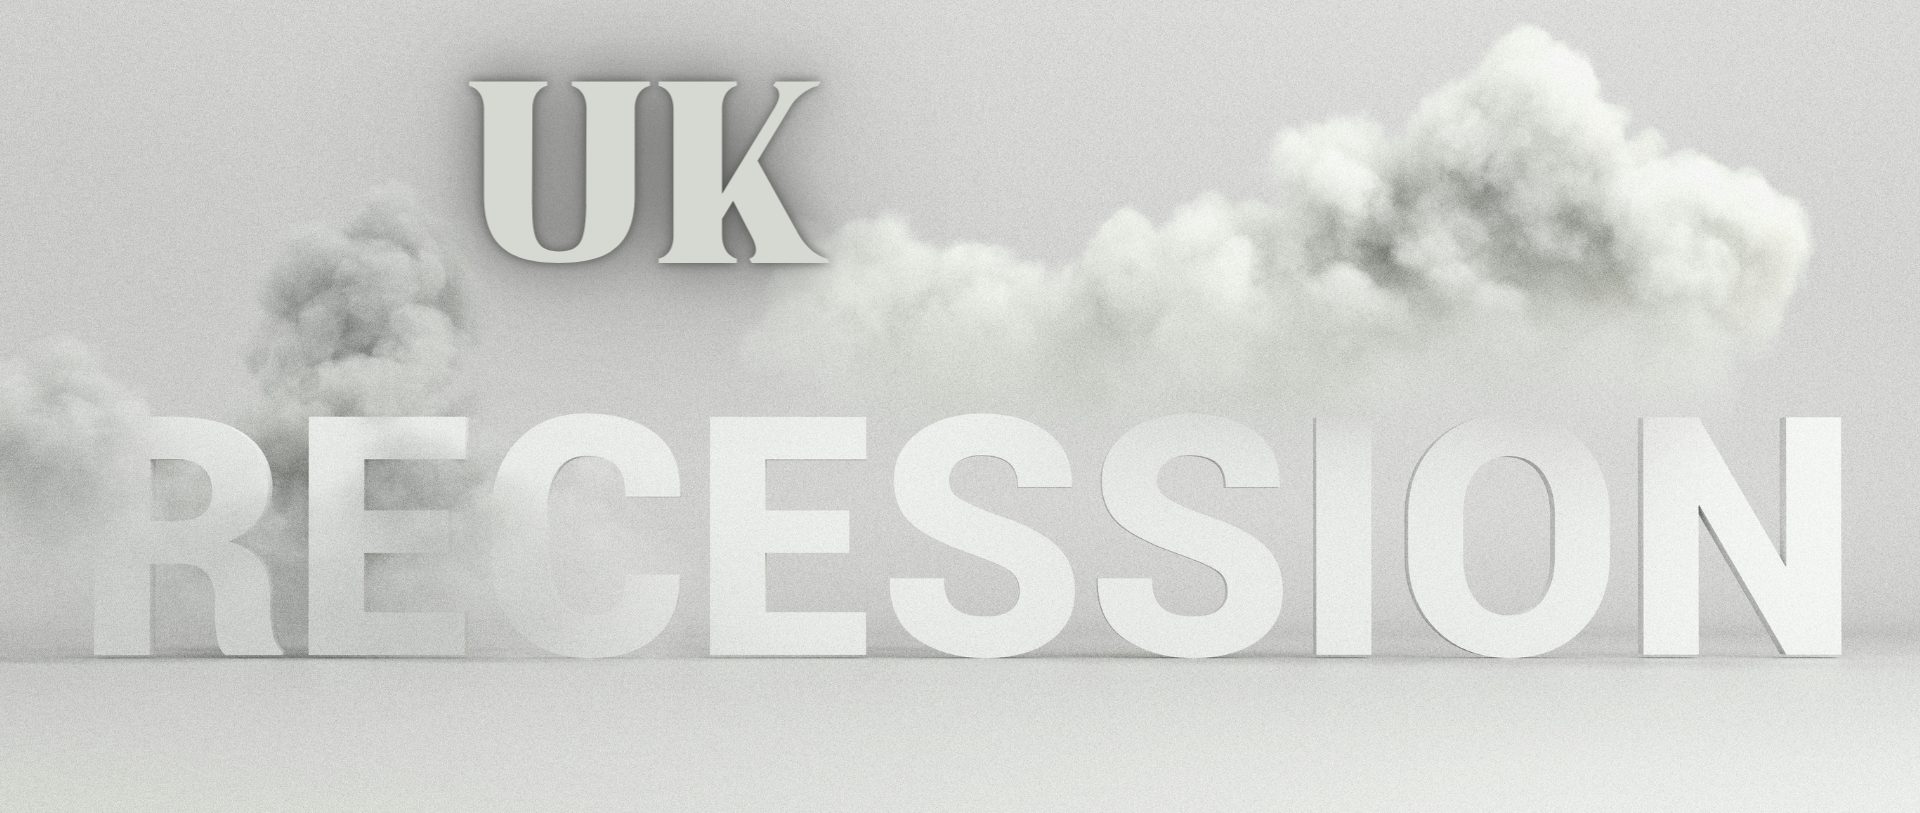 UK Recession Unlock The Keys For Restaurant Recession Survival